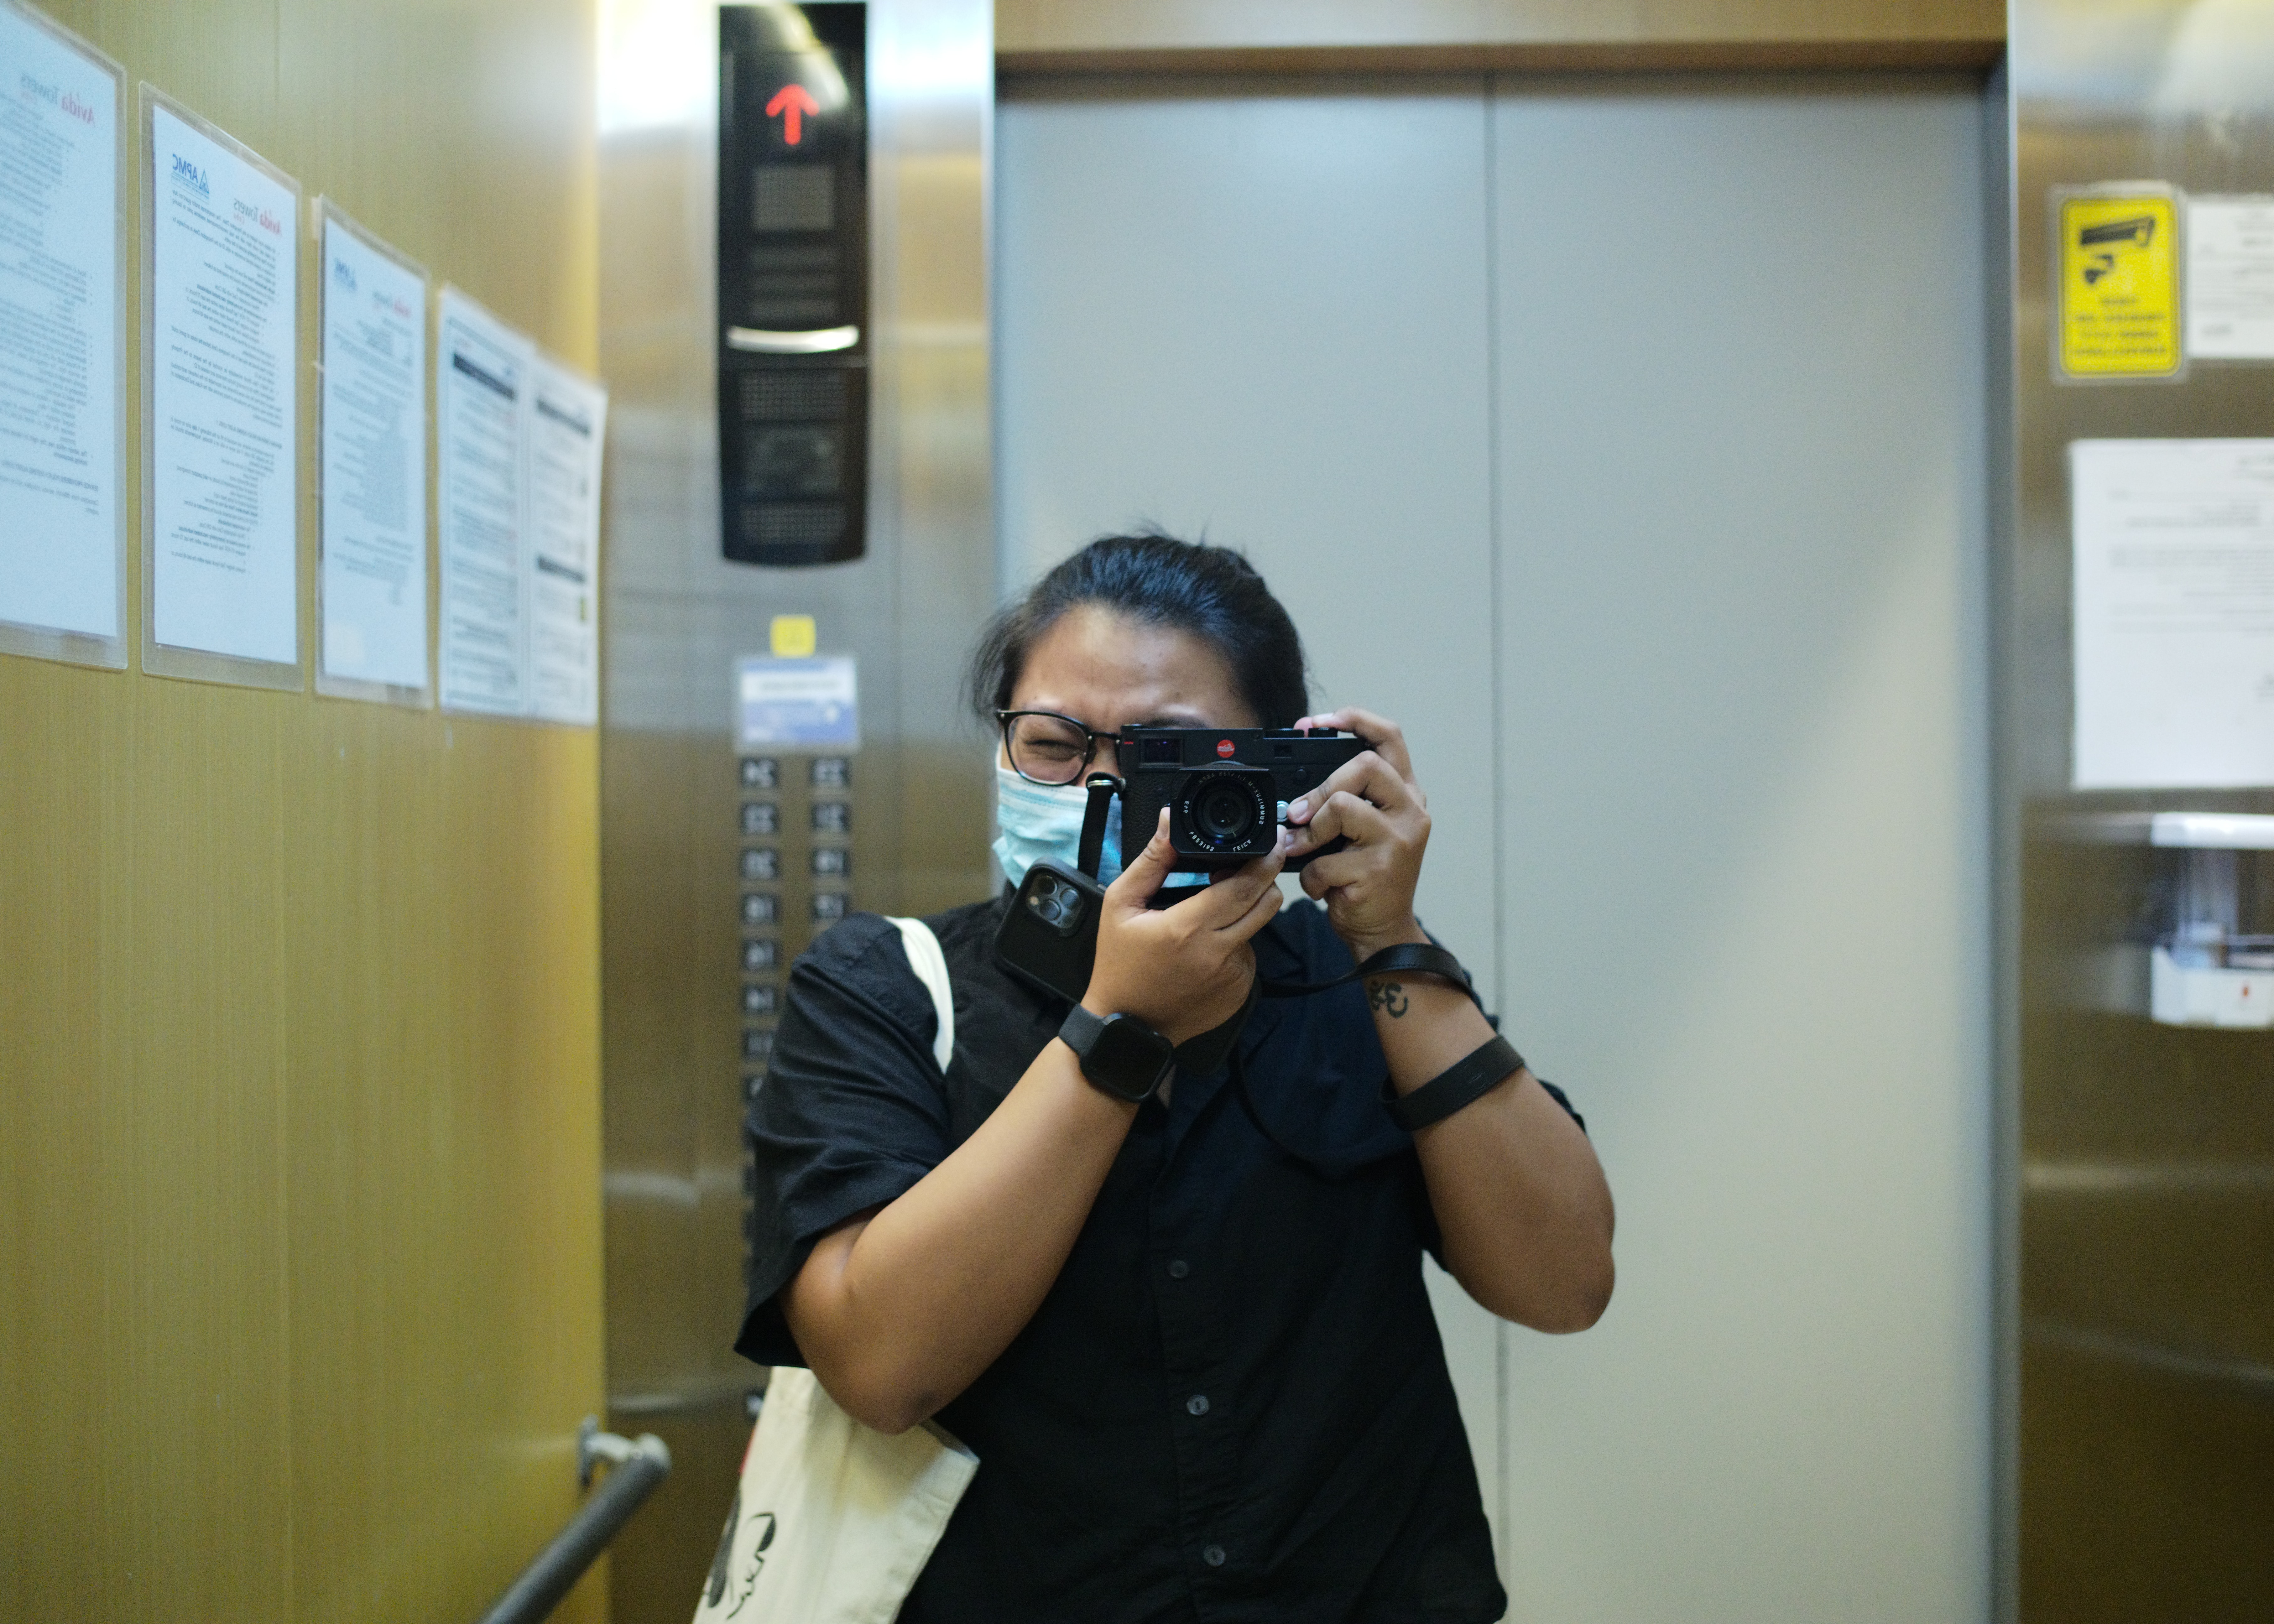 Mirror selfie in an elevator